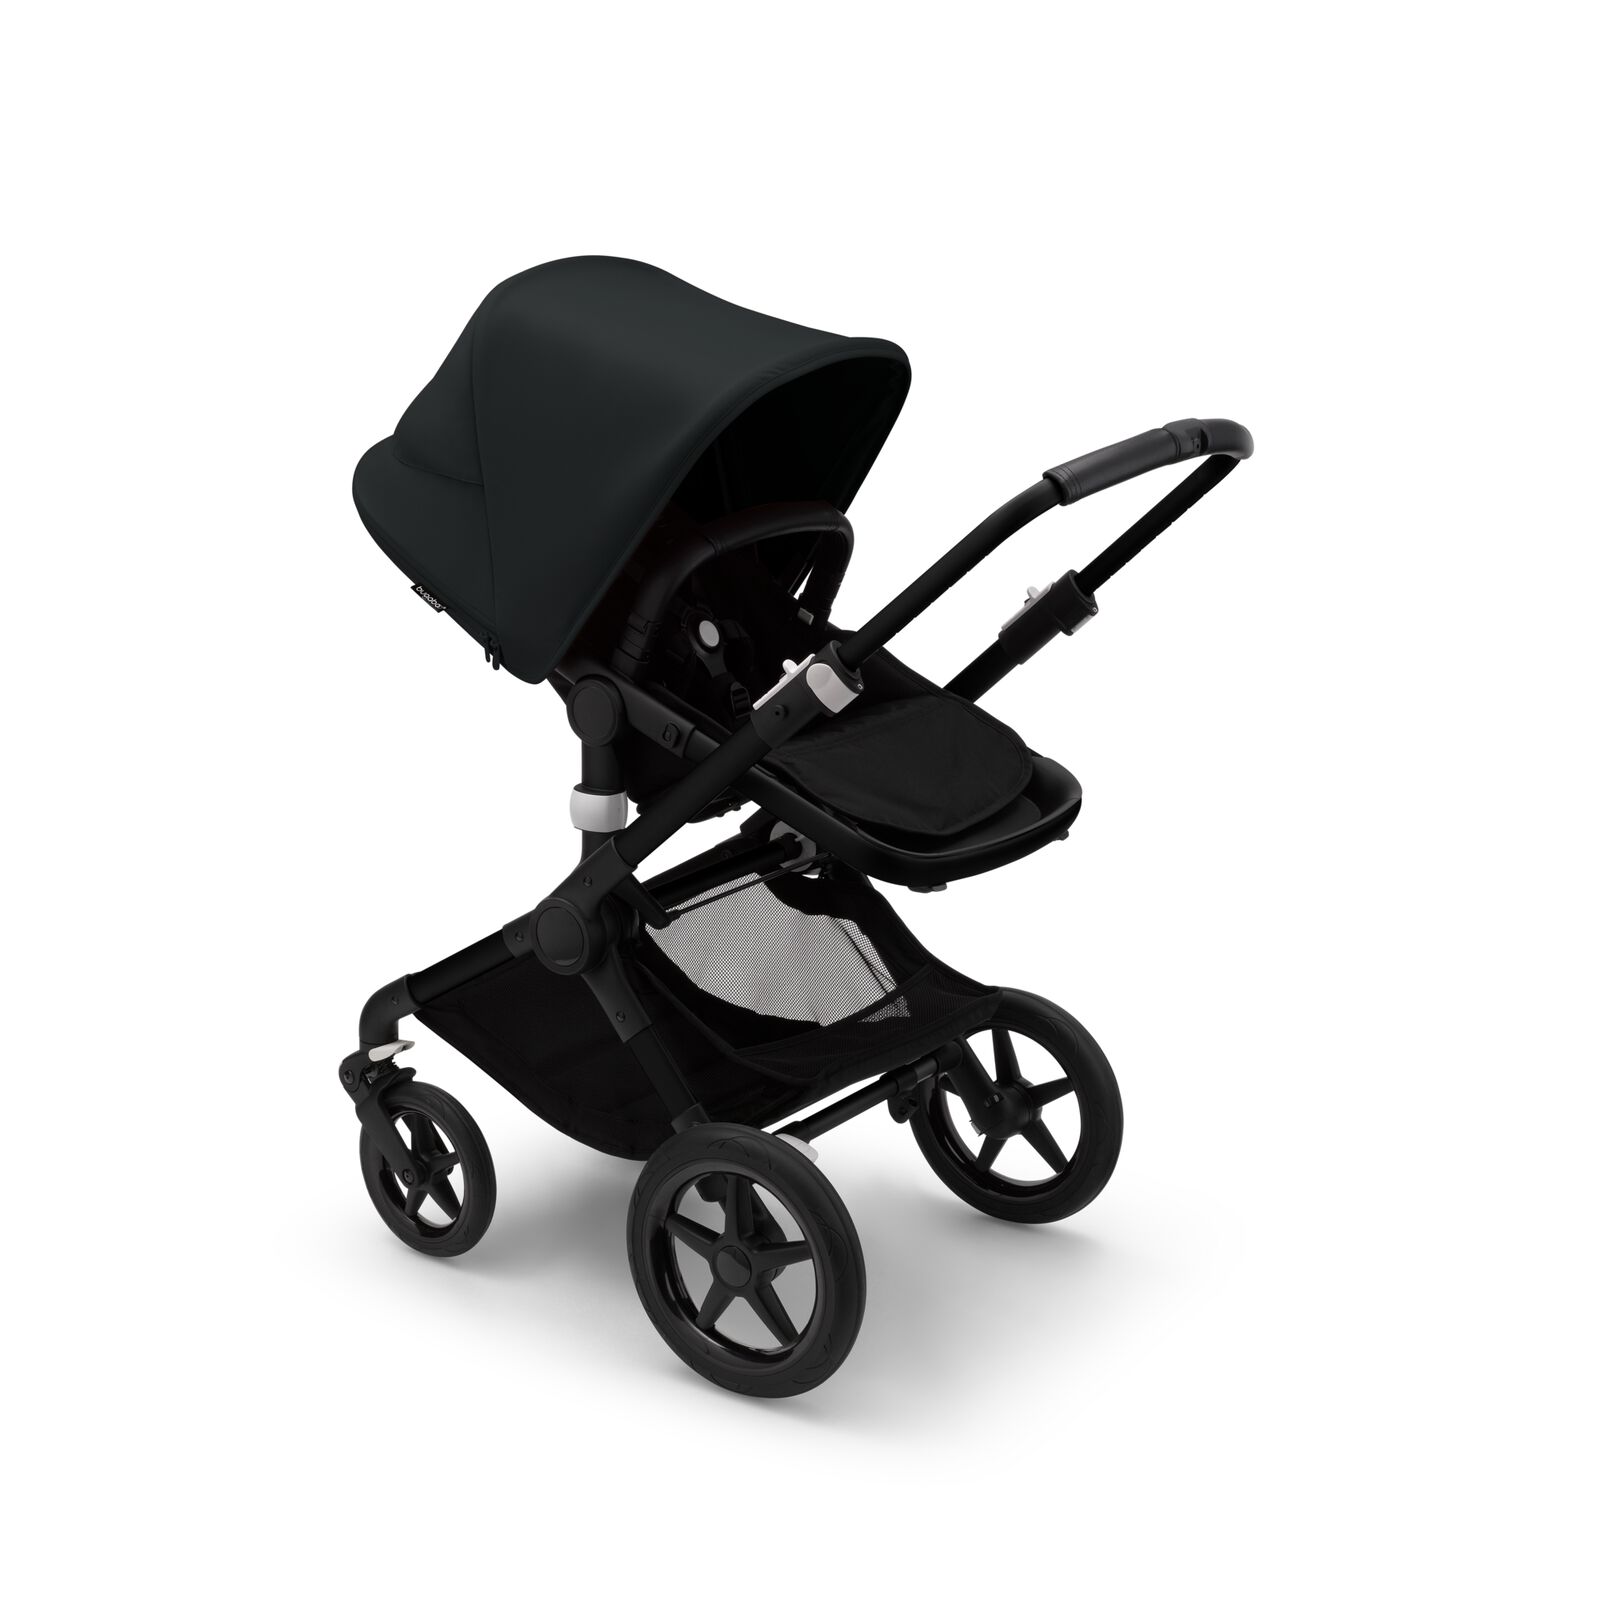 Bugaboo Fox 3 seat stroller with black frame, black fabrics, and black sun canopy.